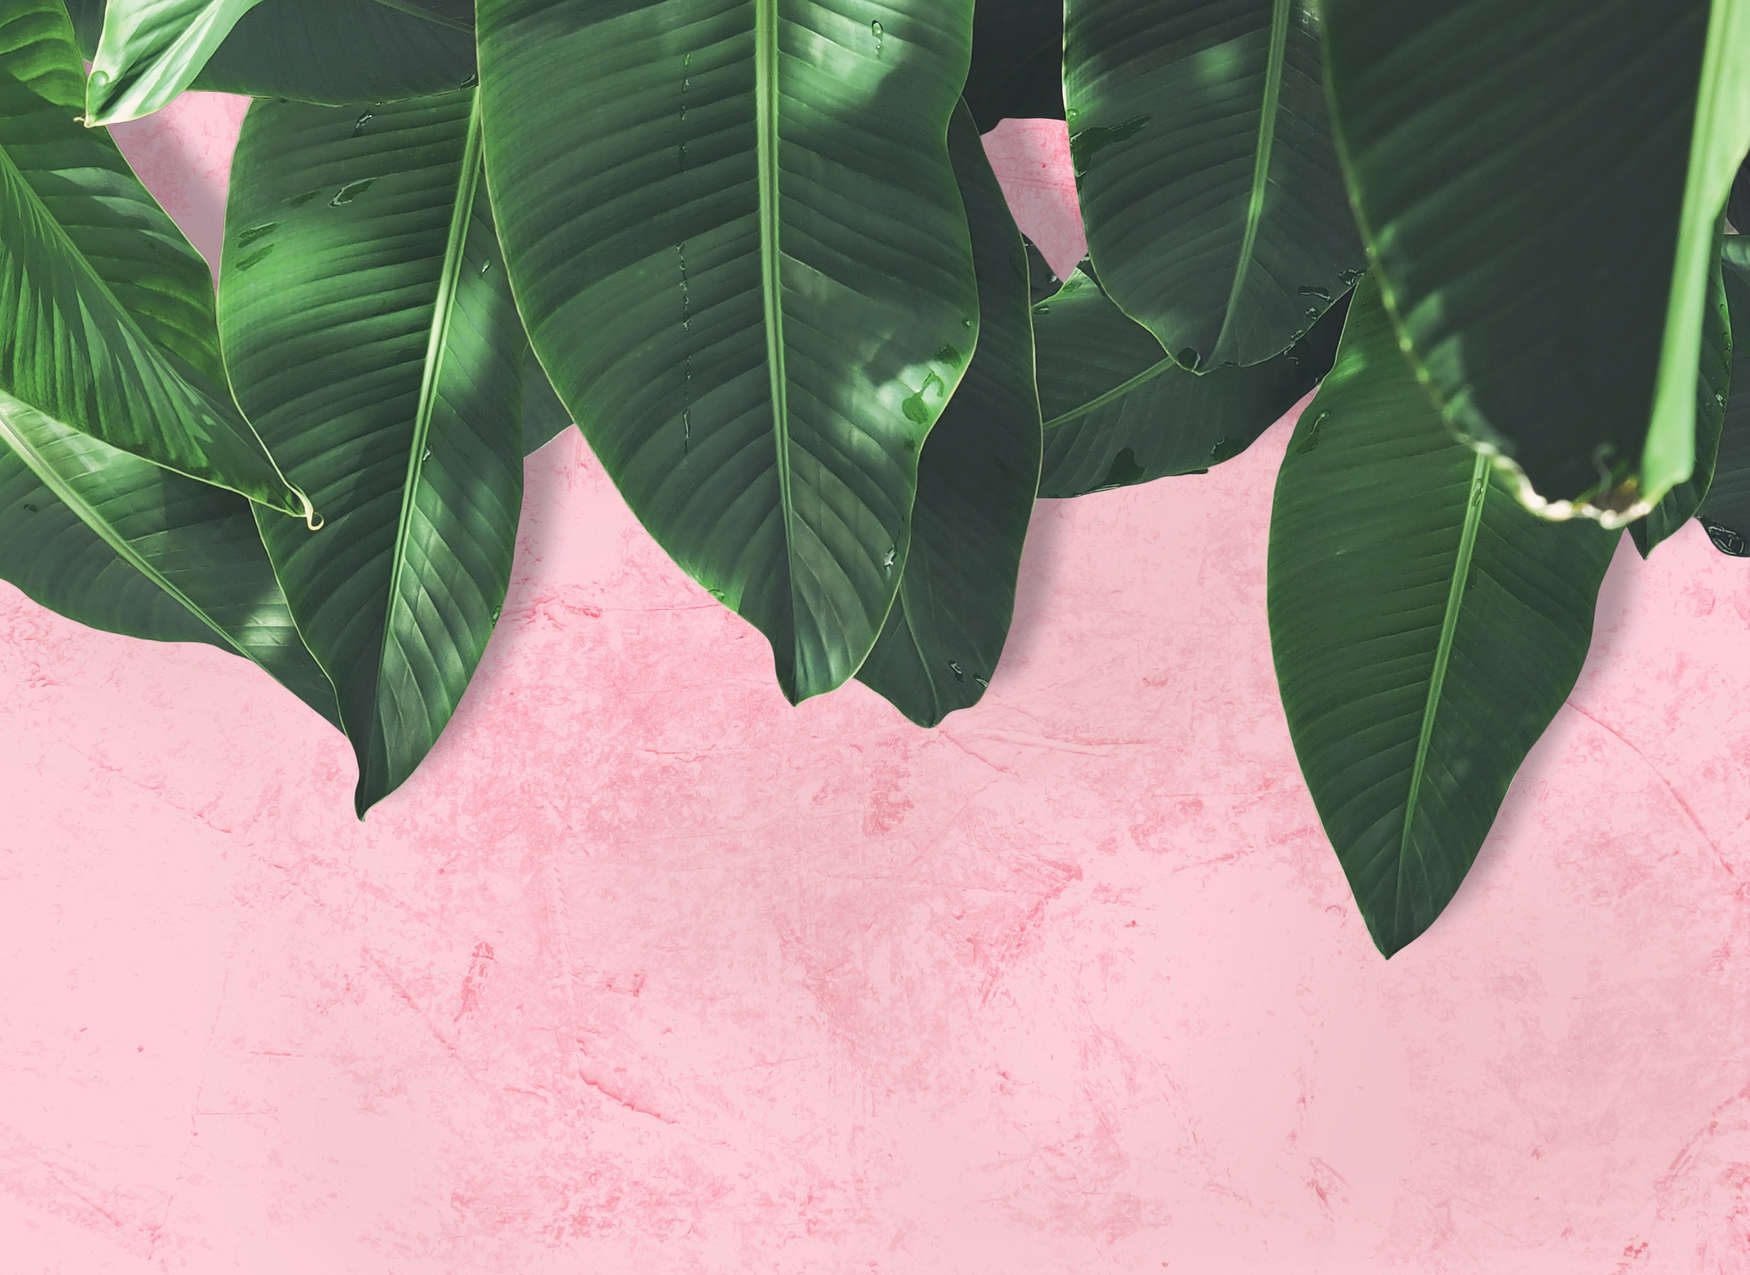             Fototapete tropische Blätterwand – Rosa, Grün
        